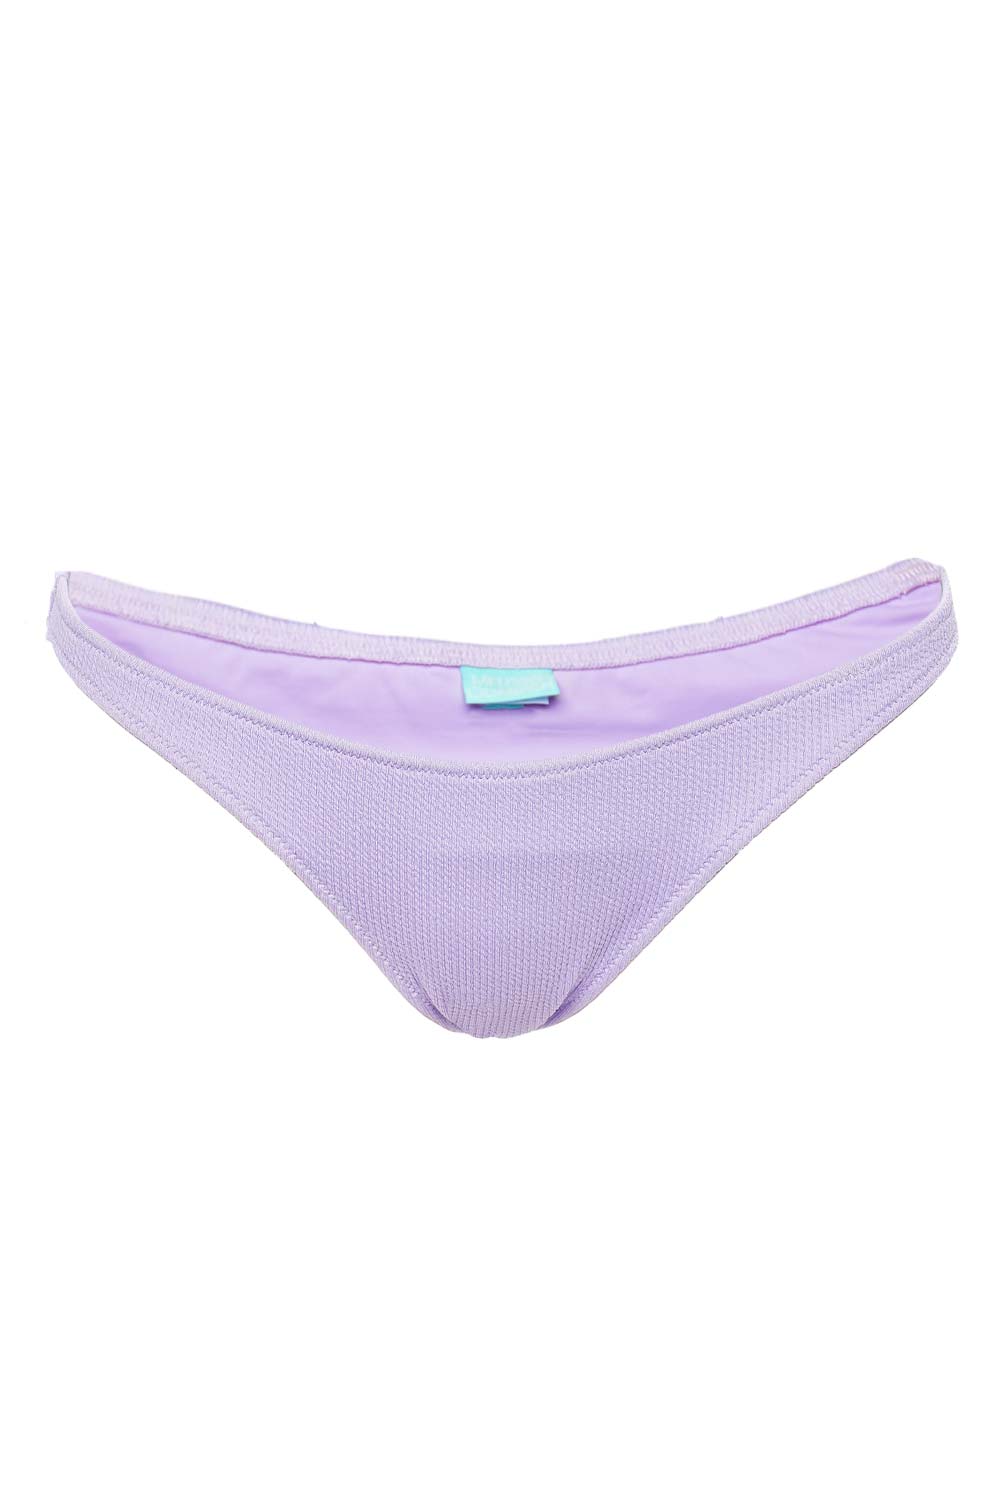 Melissa Odabash Ibiza Lavender Rib Knit Bikini Bottom